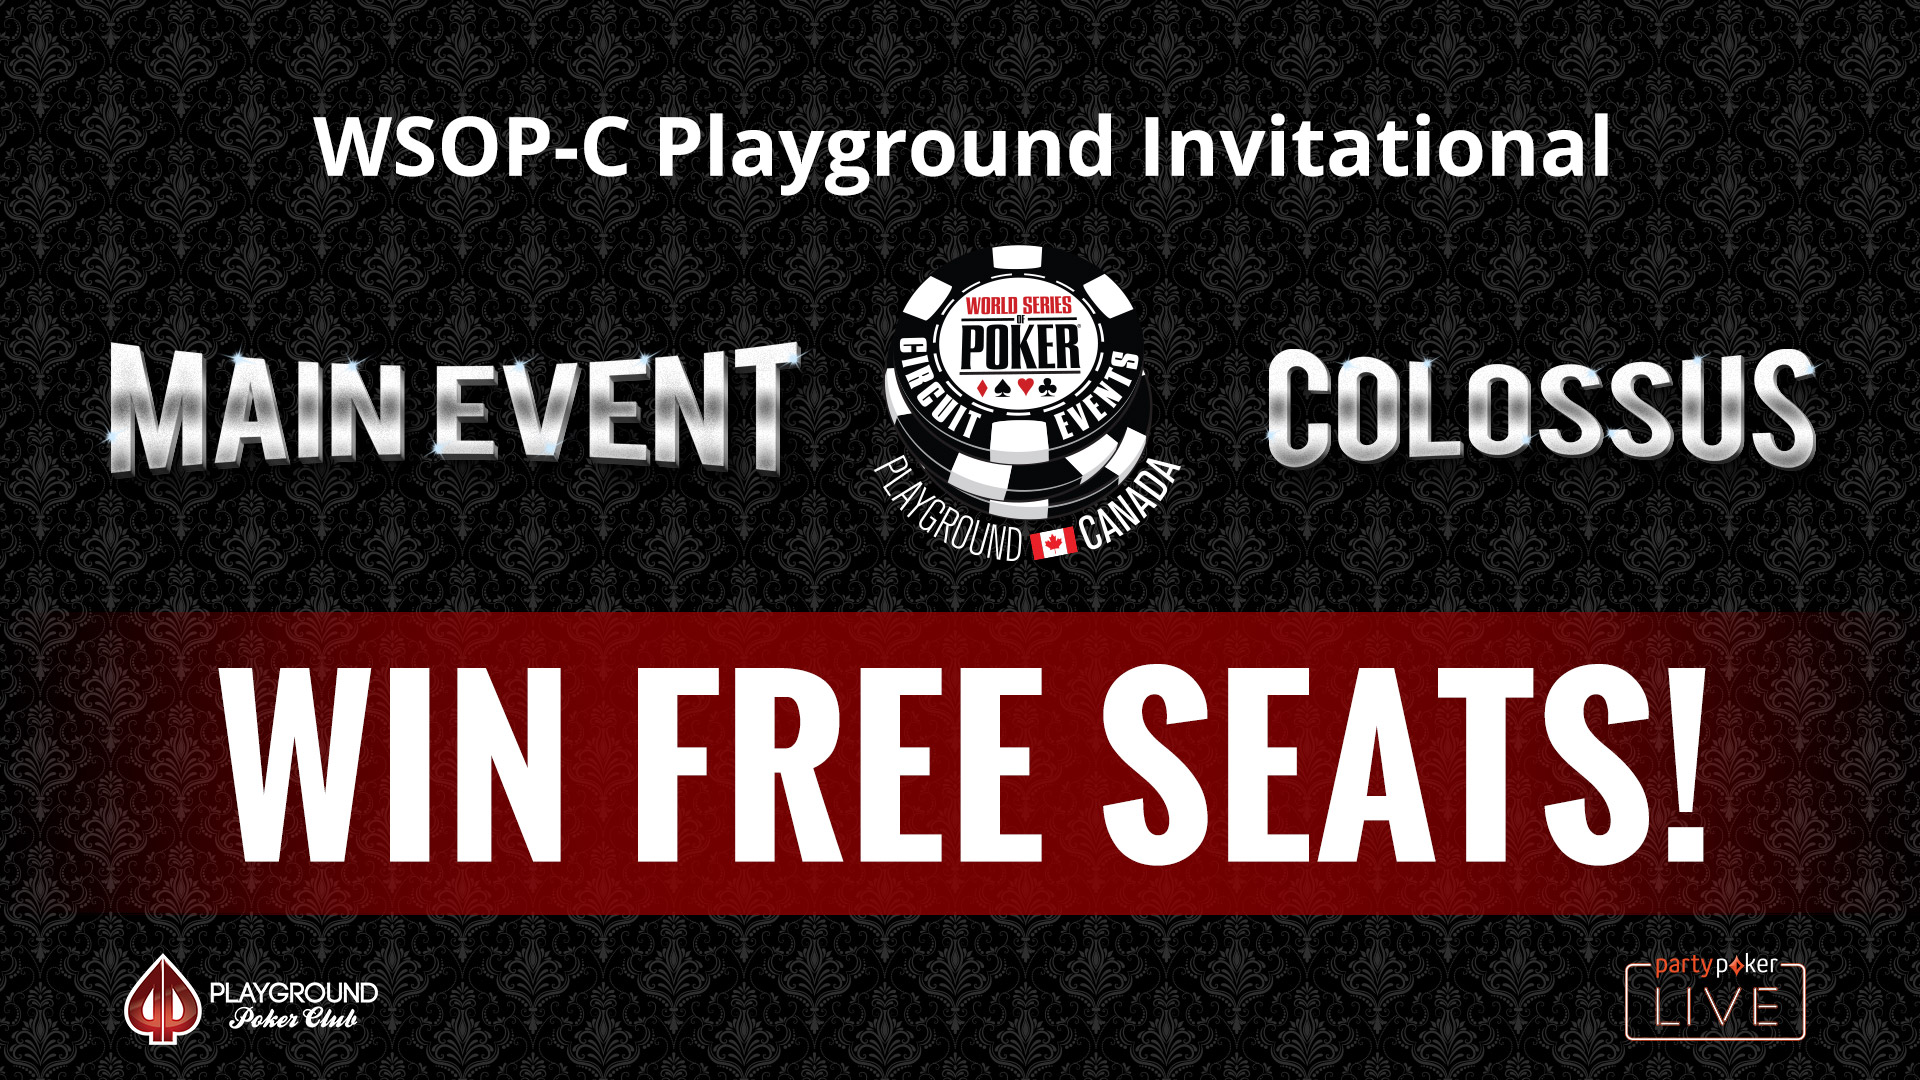 WSOP-C Playground Invitational – Free seats!